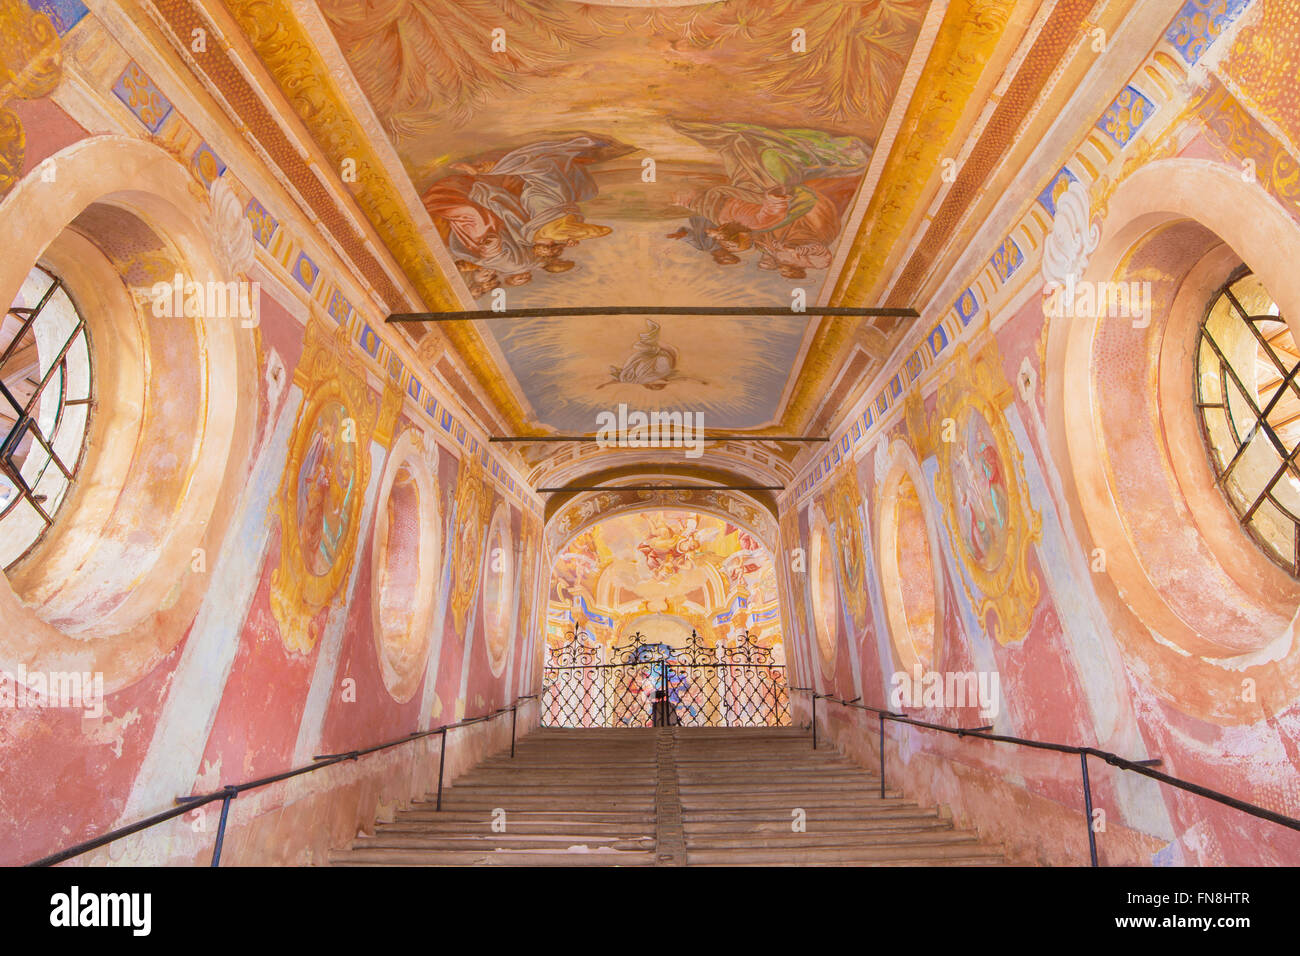 BANSKA Stiavnica, Eslovaquia - Febrero 20, 2015: el fresco de la Ascensión del Señor "Santas escaleras' Foto de stock